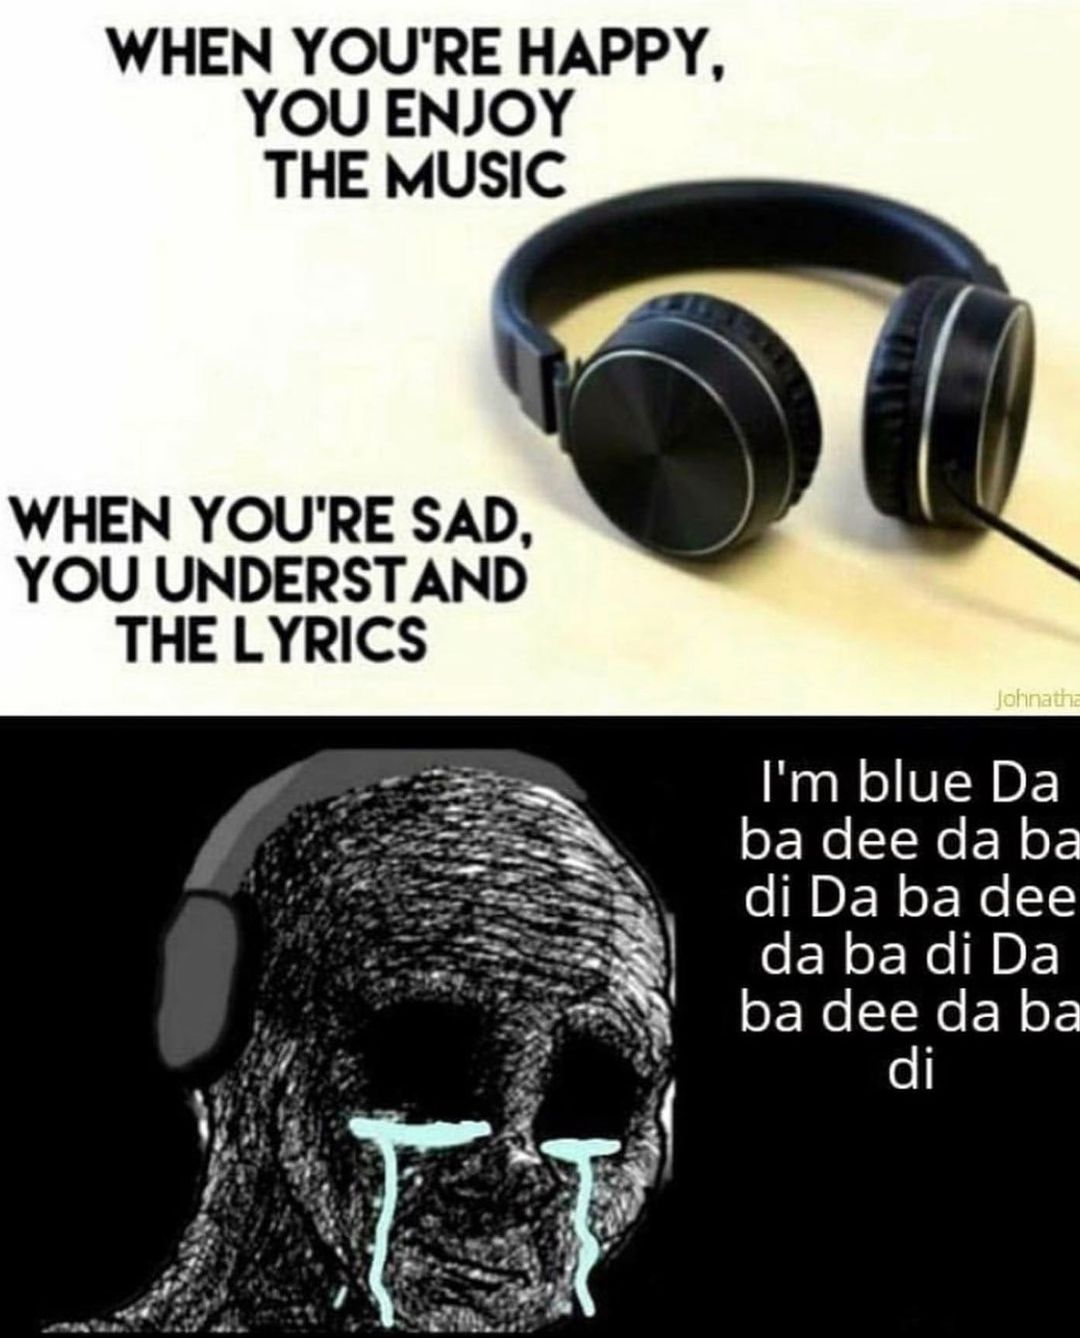 When you're happy, you enjoy the music. When you're sad, you understand the lyrics. I'm blue da ba dee da ba di da ba dee da ba di da ba dee da ba di.